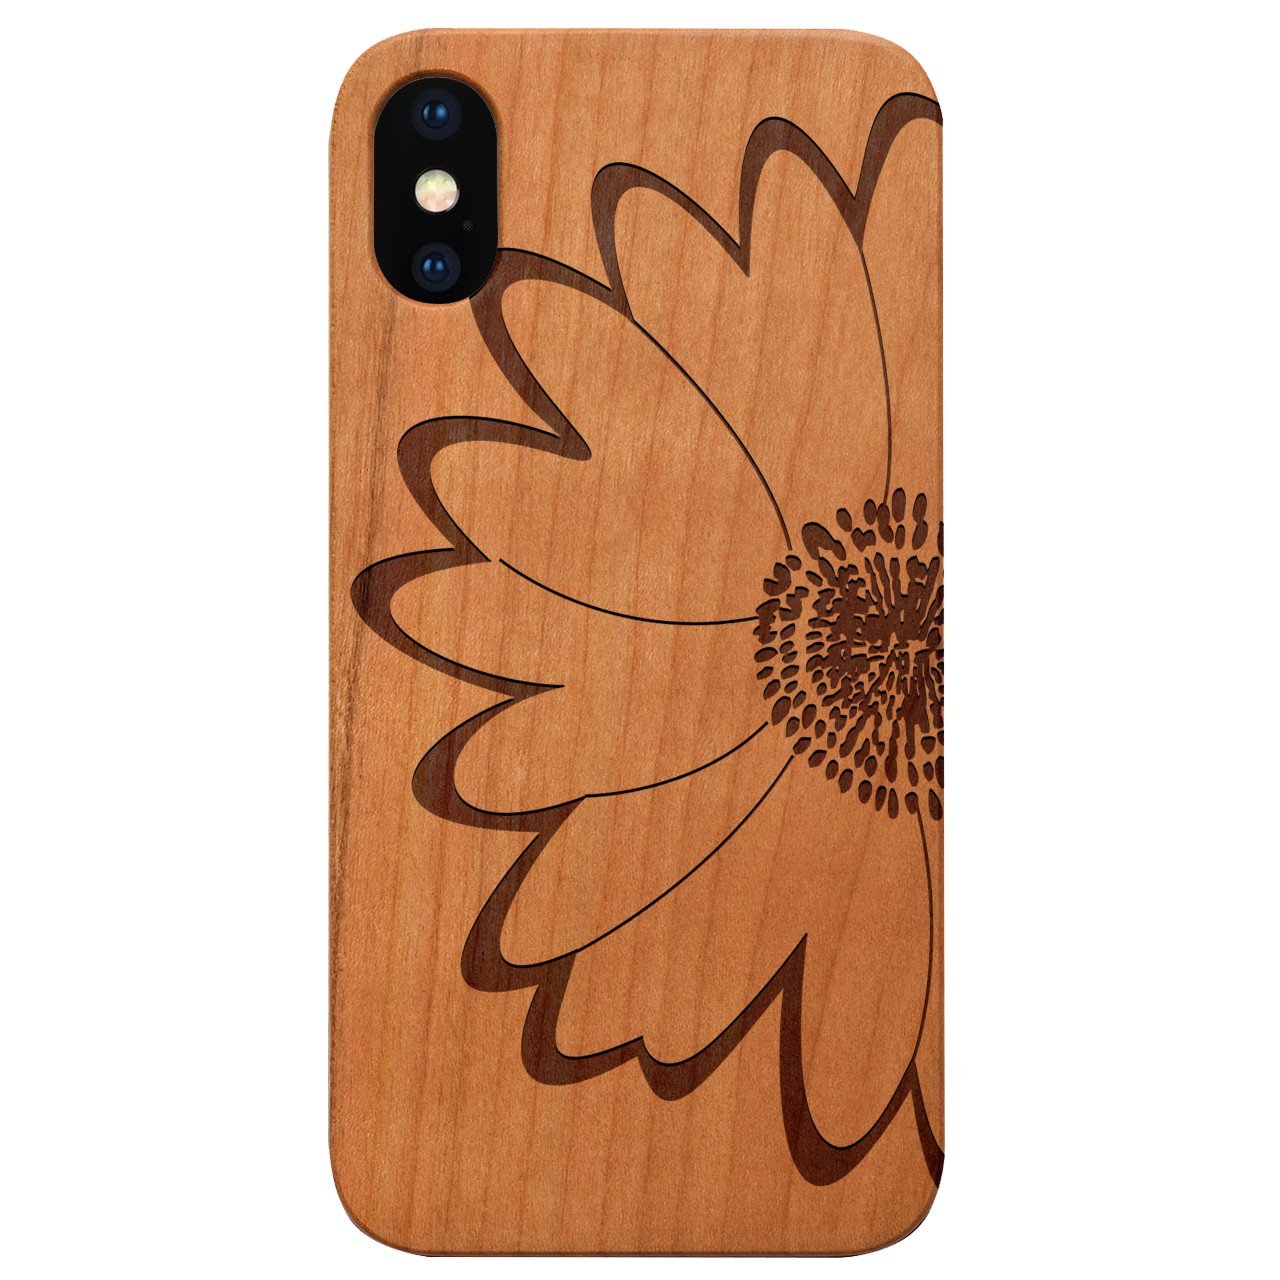 Big Flower - Engraved - Wooden Phone Case